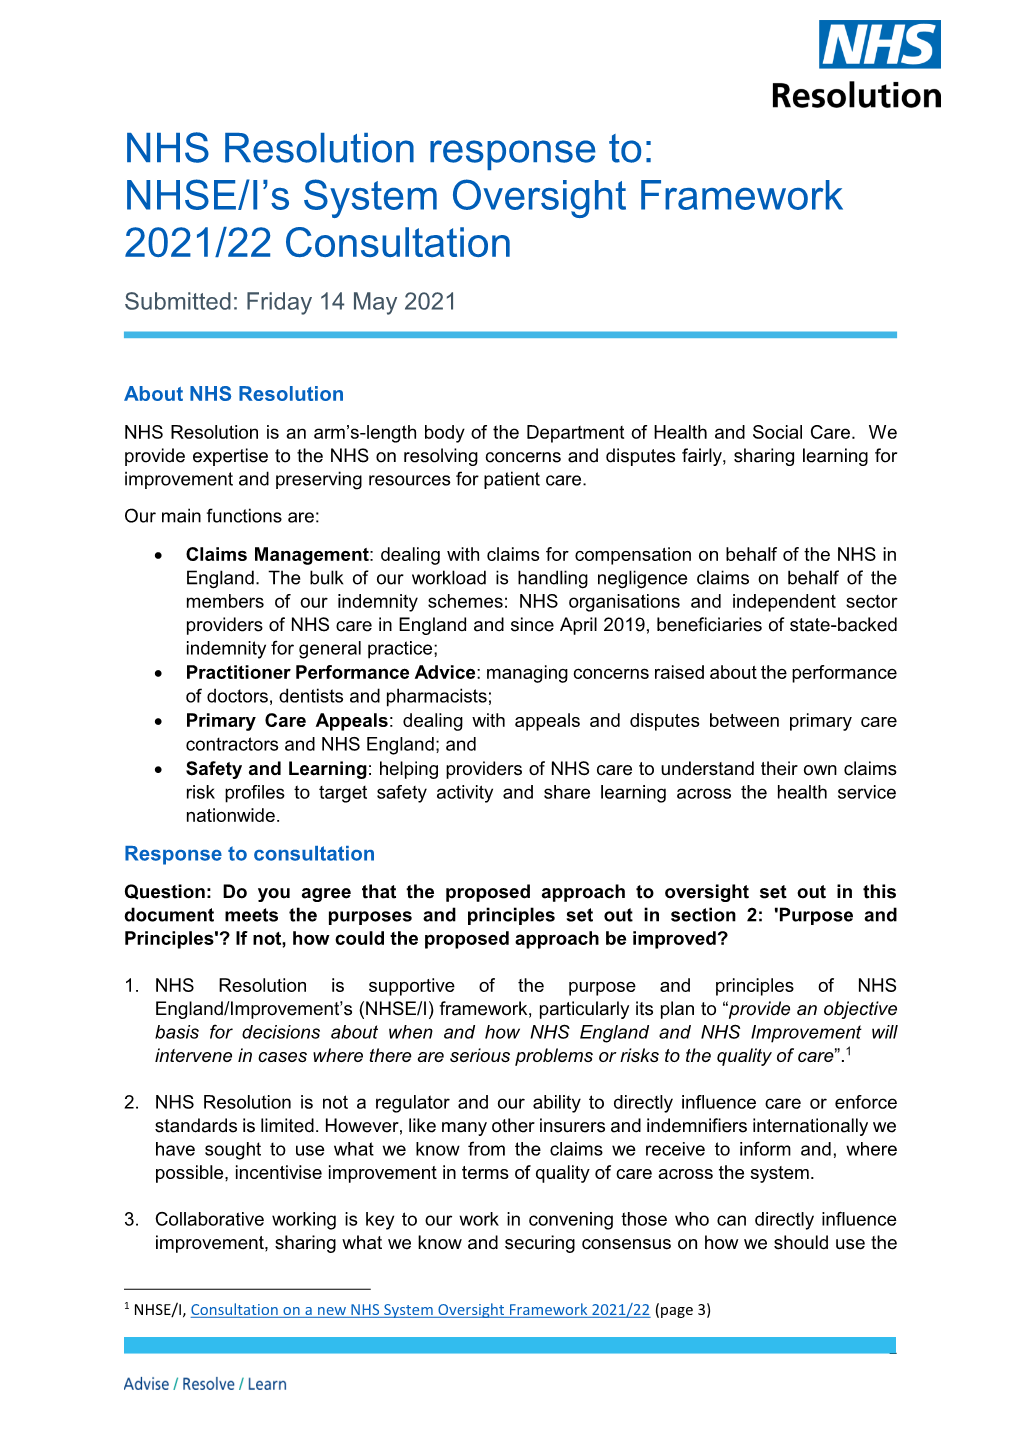 NHSE/I's System Oversight Framework 2021/22 Consultation